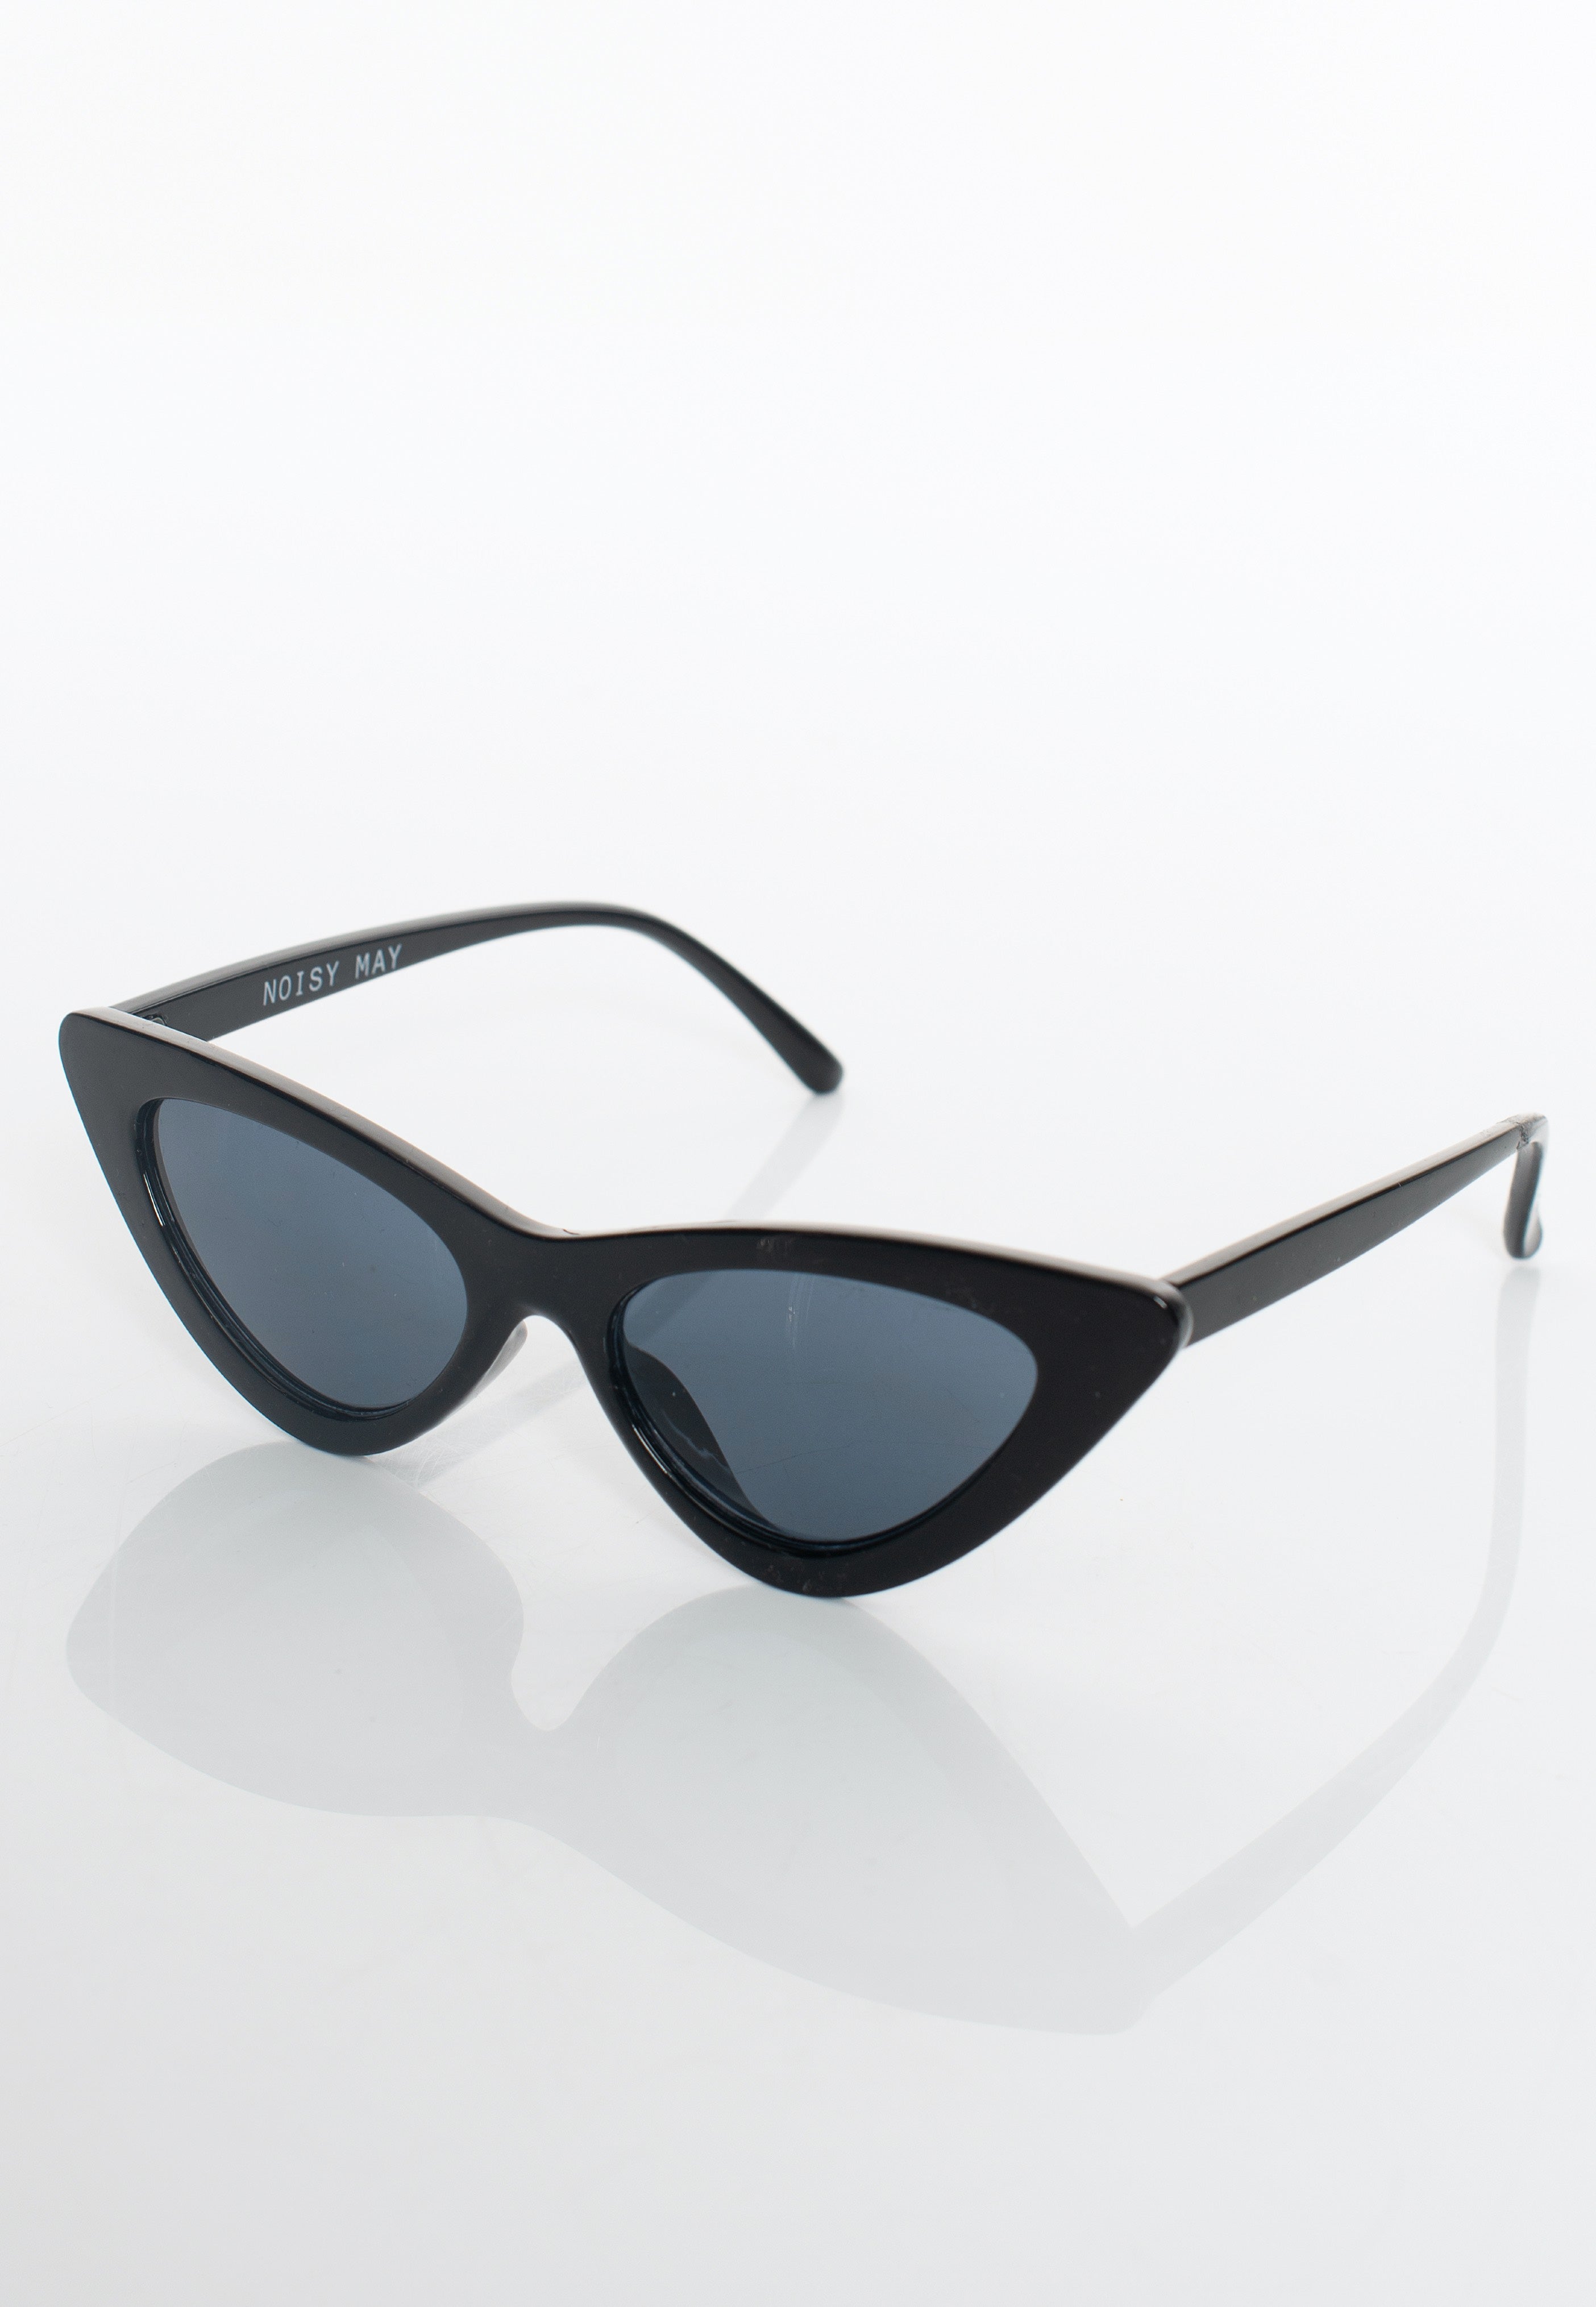 Noisy May - Maiken Black - Sunglasses